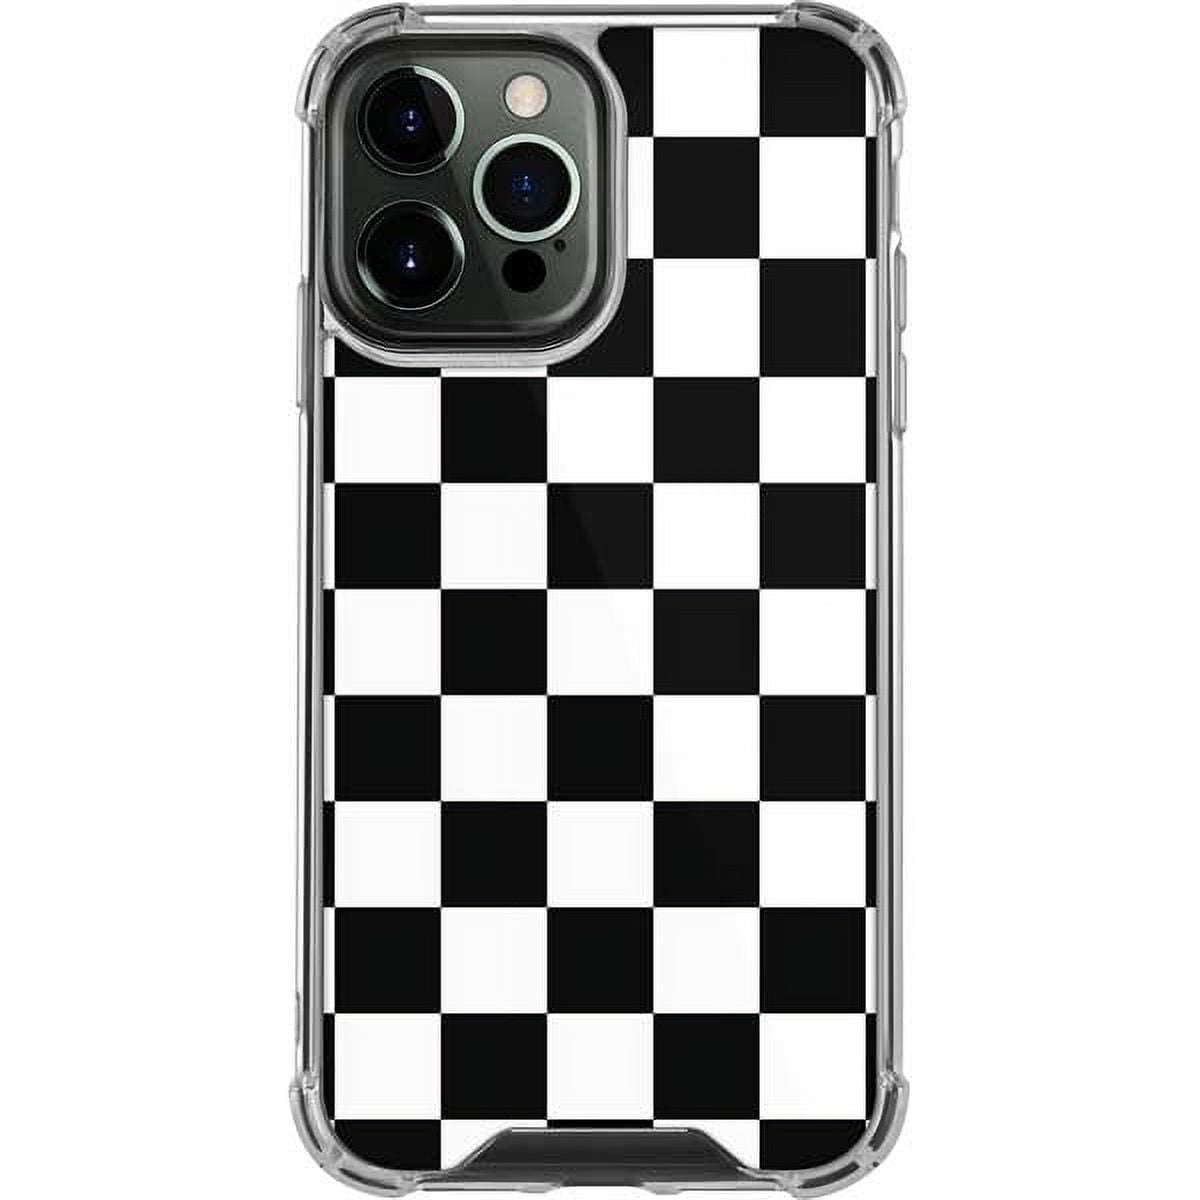 Checkered Phone Case